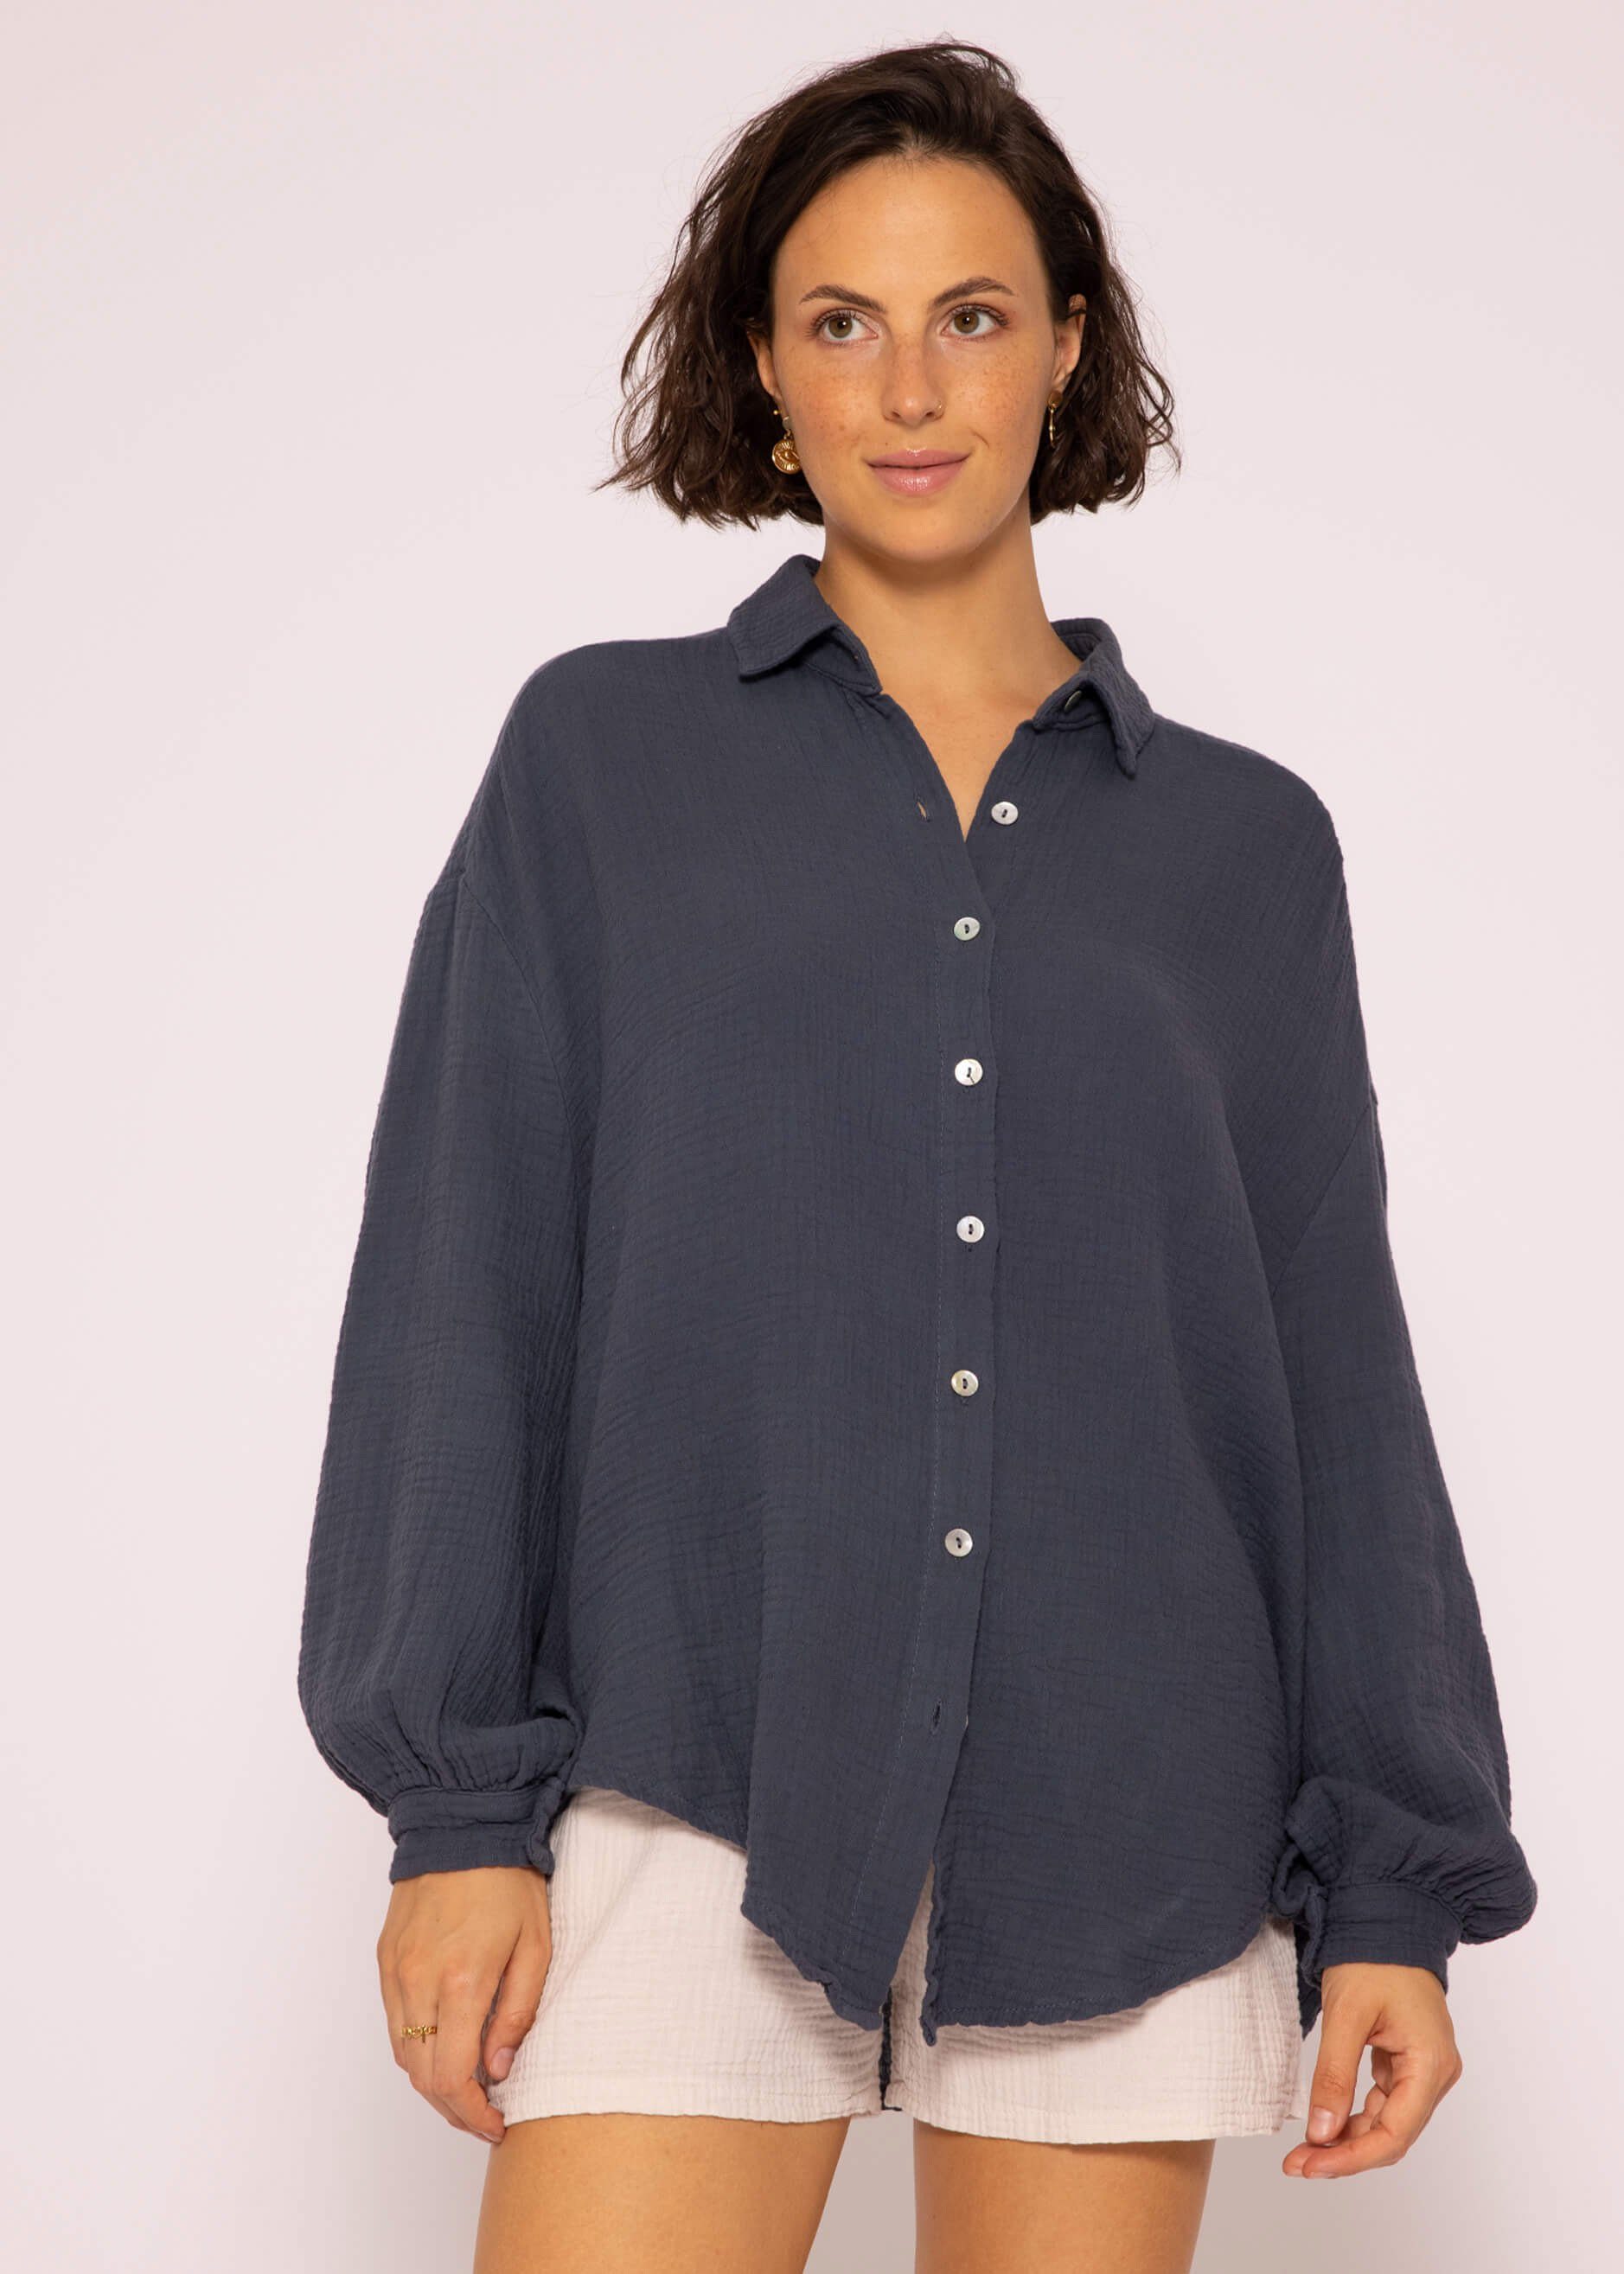 SASSYCLASSY Longbluse Oversize Musselin Bluse Damen Langarm Hemdbluse lang aus Baumwolle mit V-Ausschnitt, One Size (Gr. 36-48) Dunkelgrau